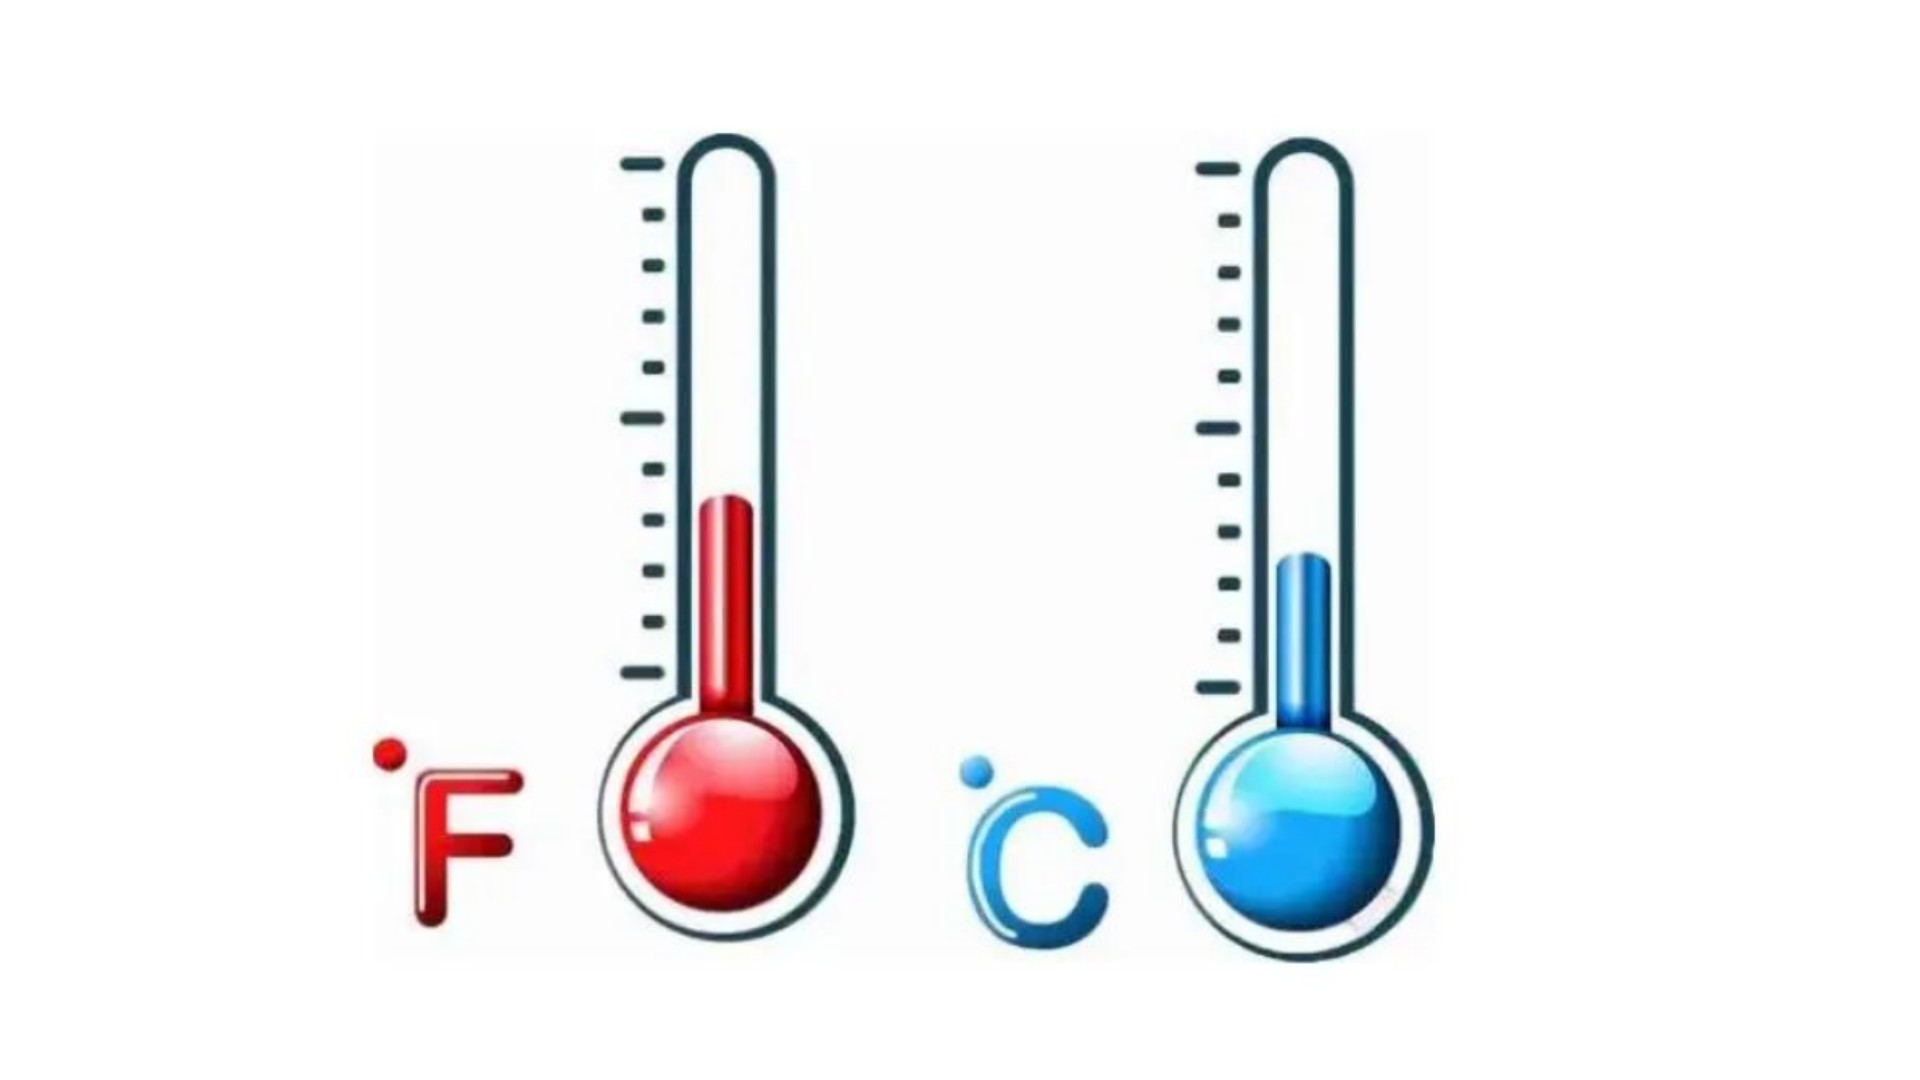 Low temperatures and high temperatures